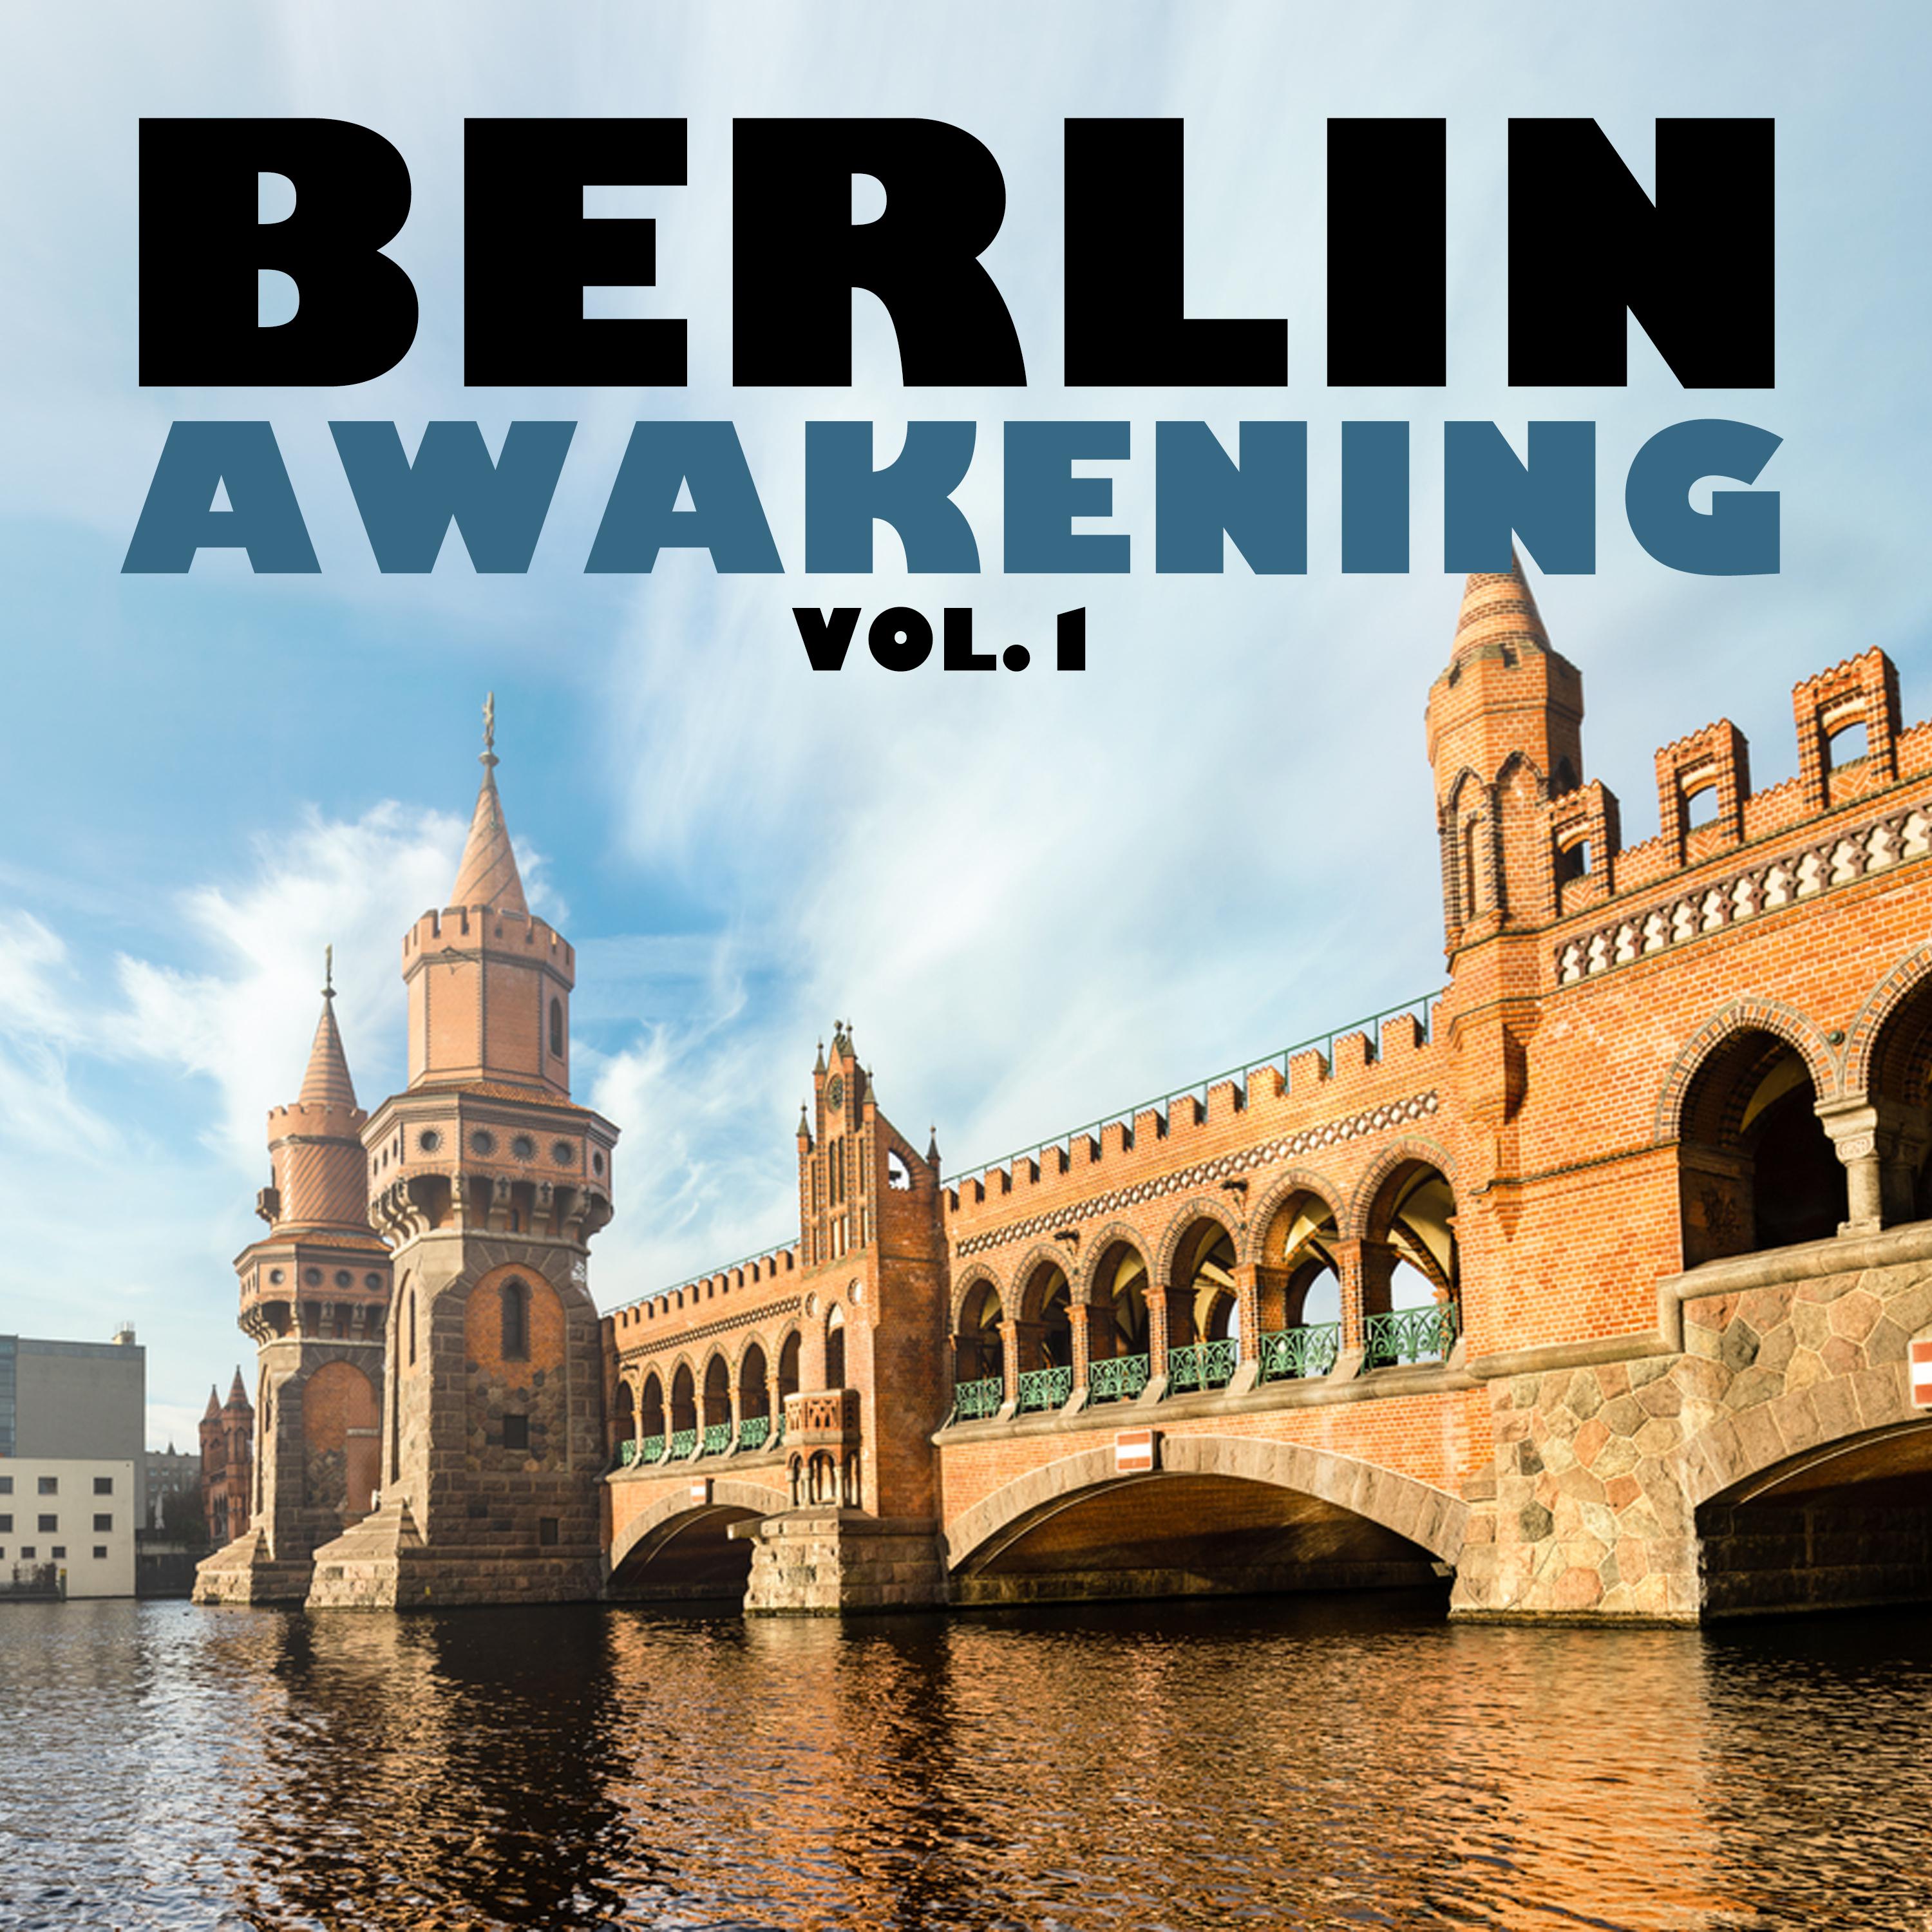 Berlin Awakening, Vol. 1